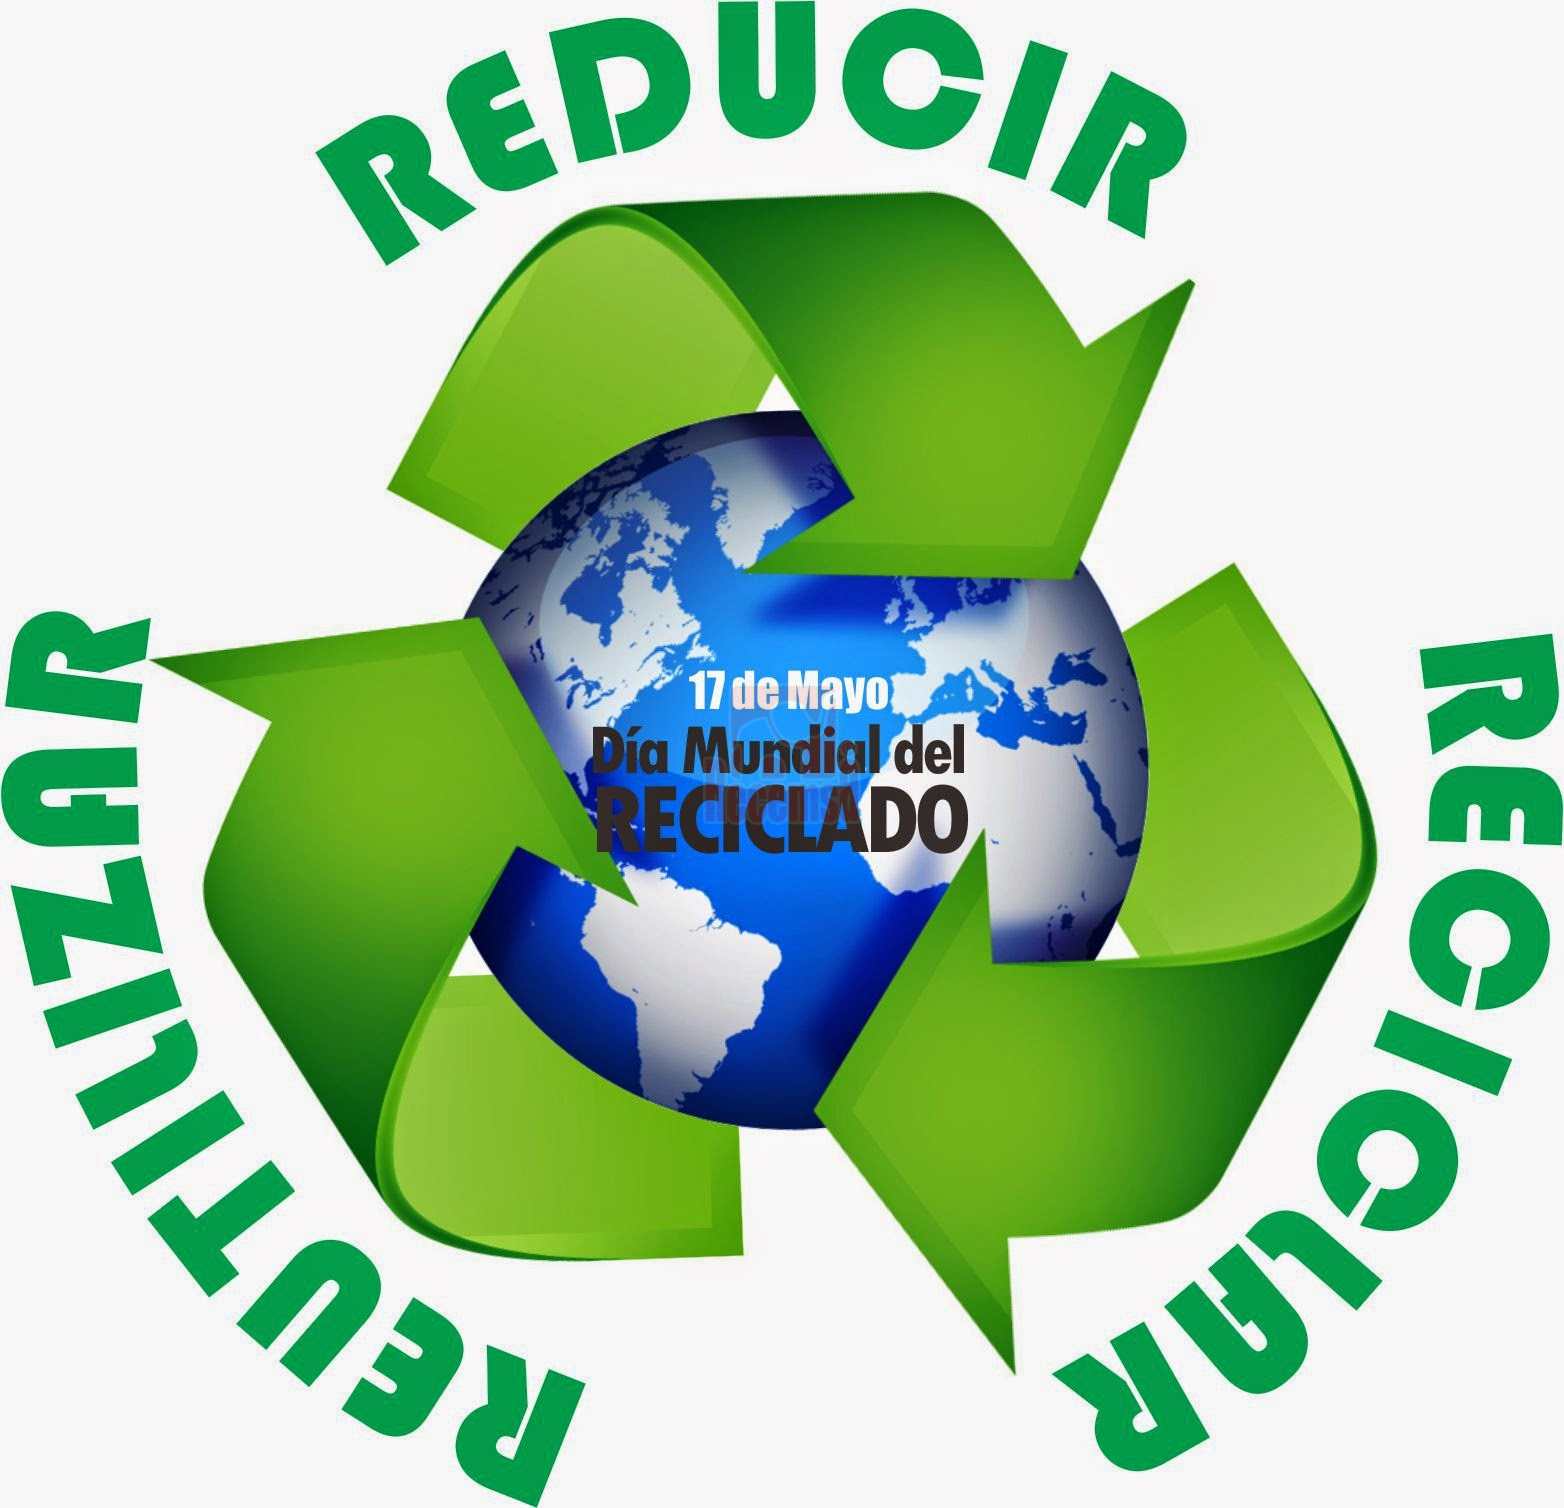 El top 48 imagen que significa el logo de reciclar